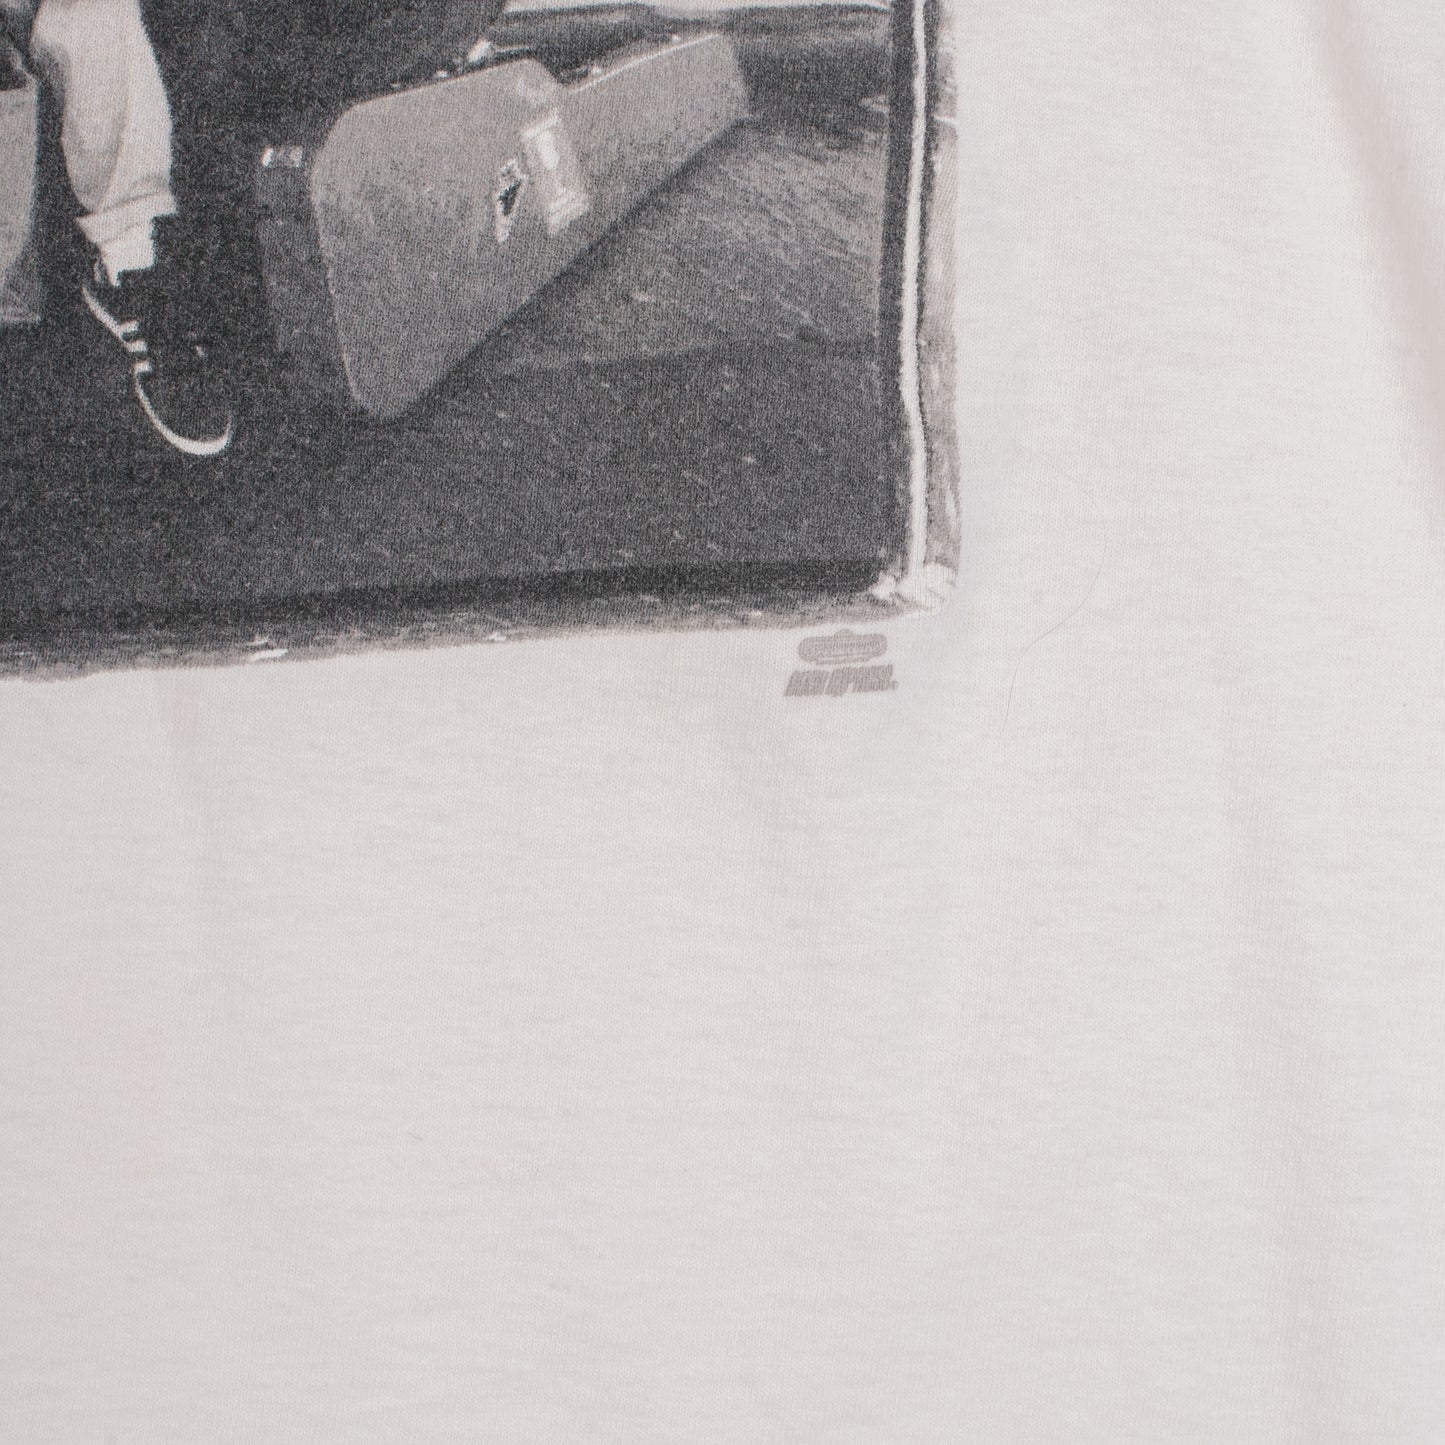 Vintage 1992 Beastie Boys Check Your Head T-Shirt